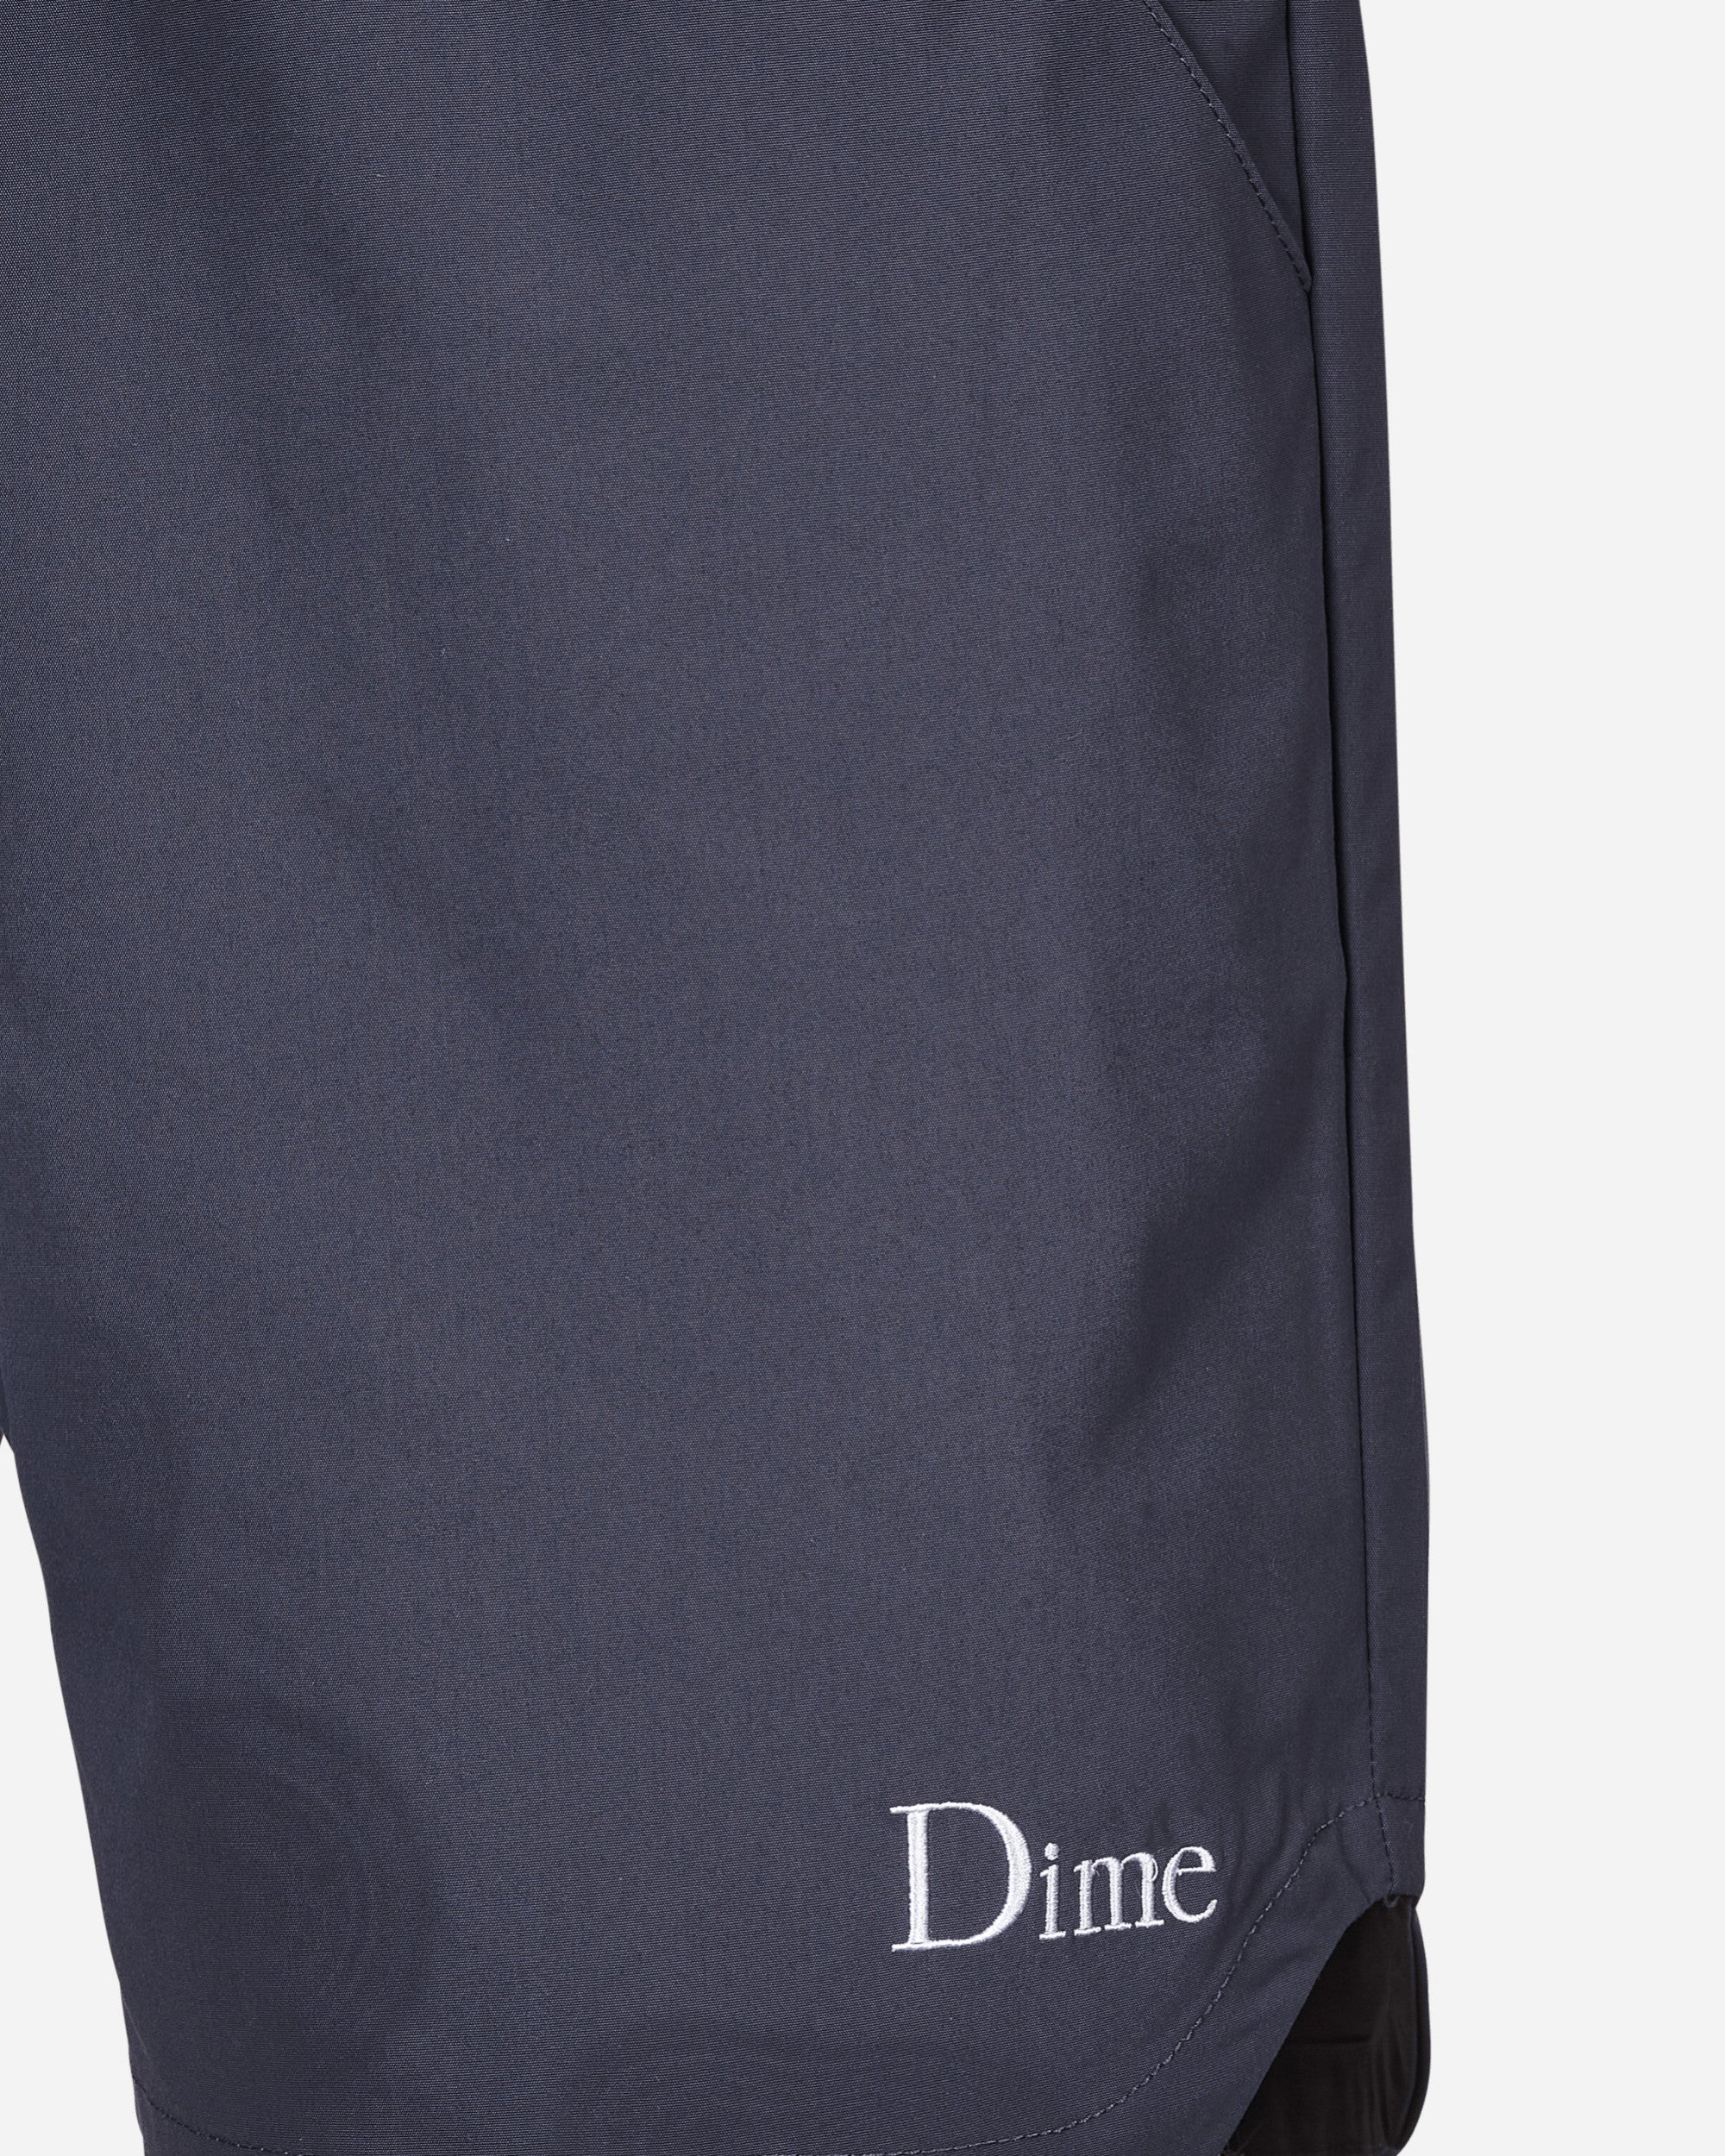 Dime Dime Classic Shorts Charcoal Blue Shorts Short DIMESU34 CHA